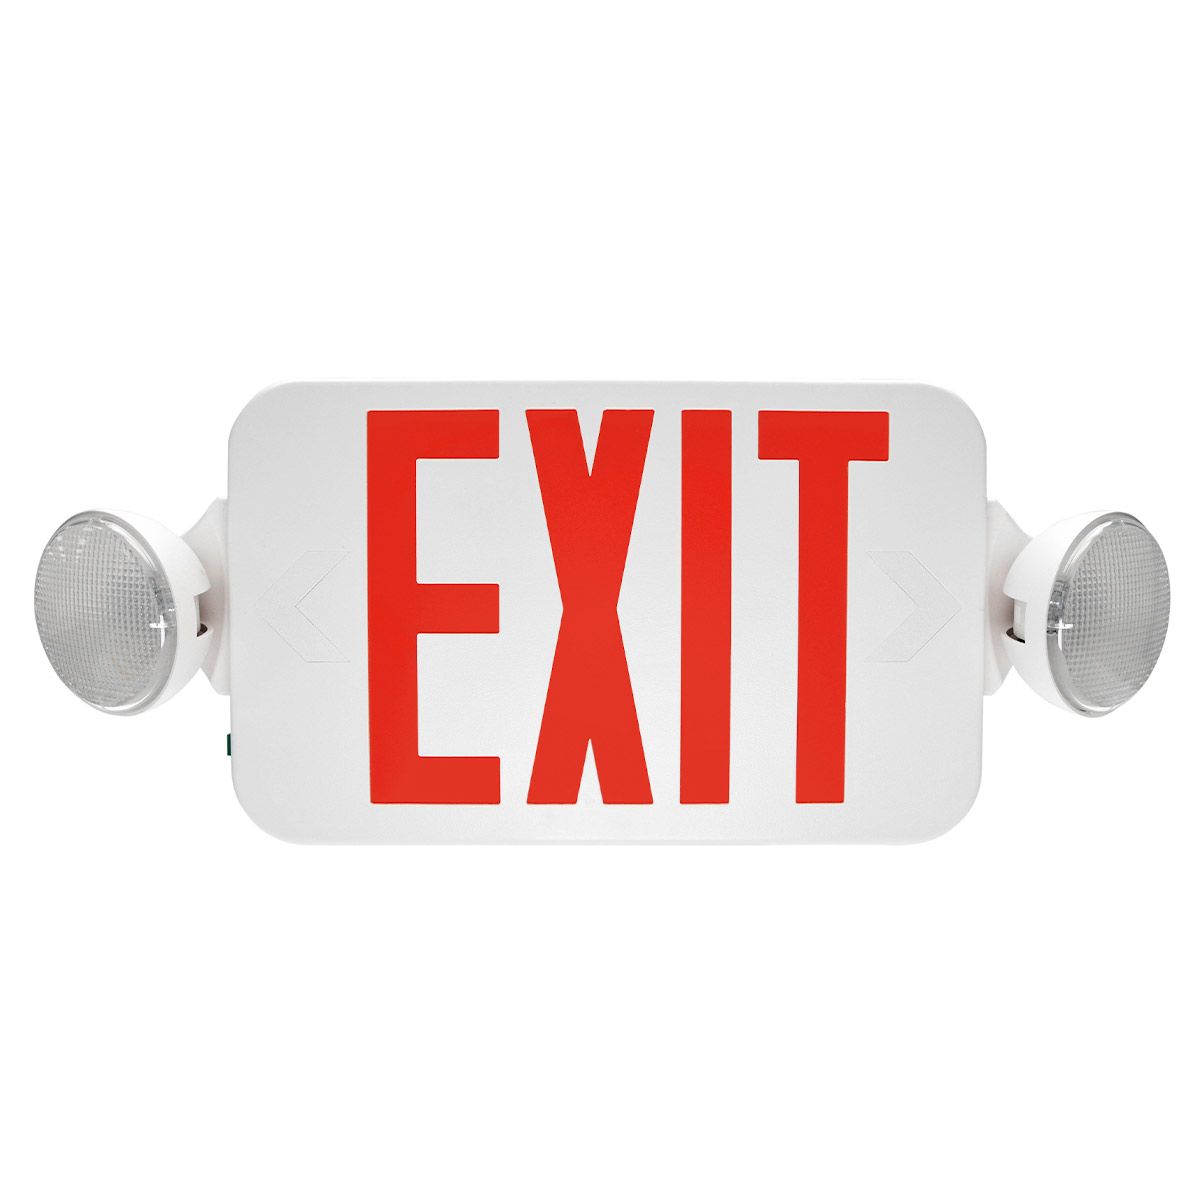 MaxLite LED Exit/Emergency Light Combo - Remote Capable